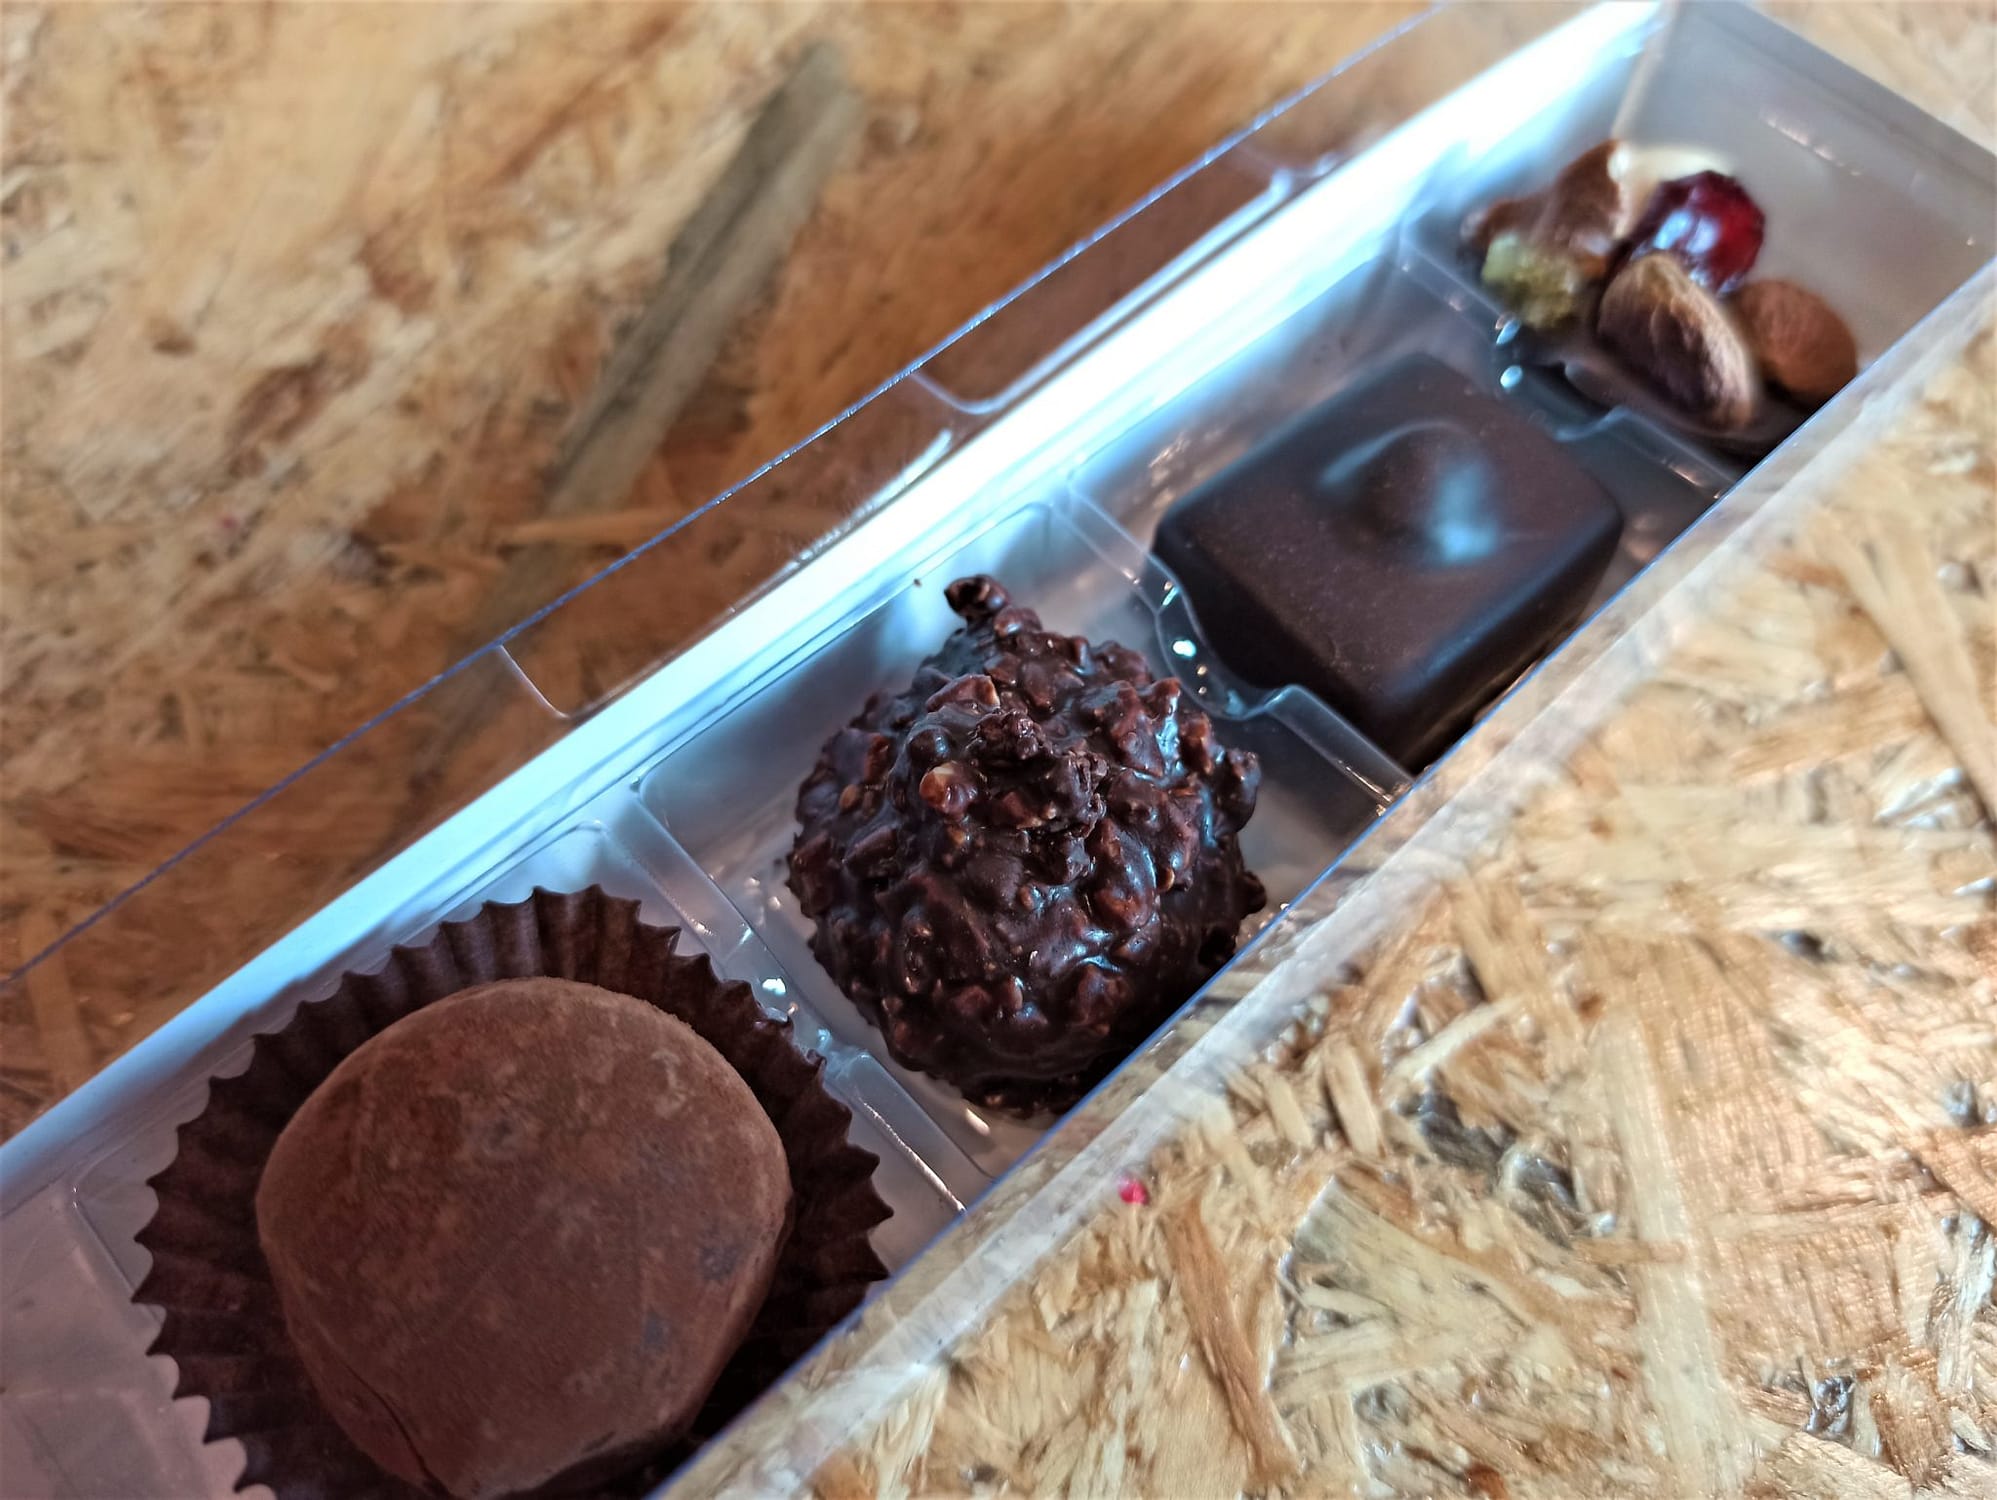 Chocolates from The Chocolate Factory, Khao Yai